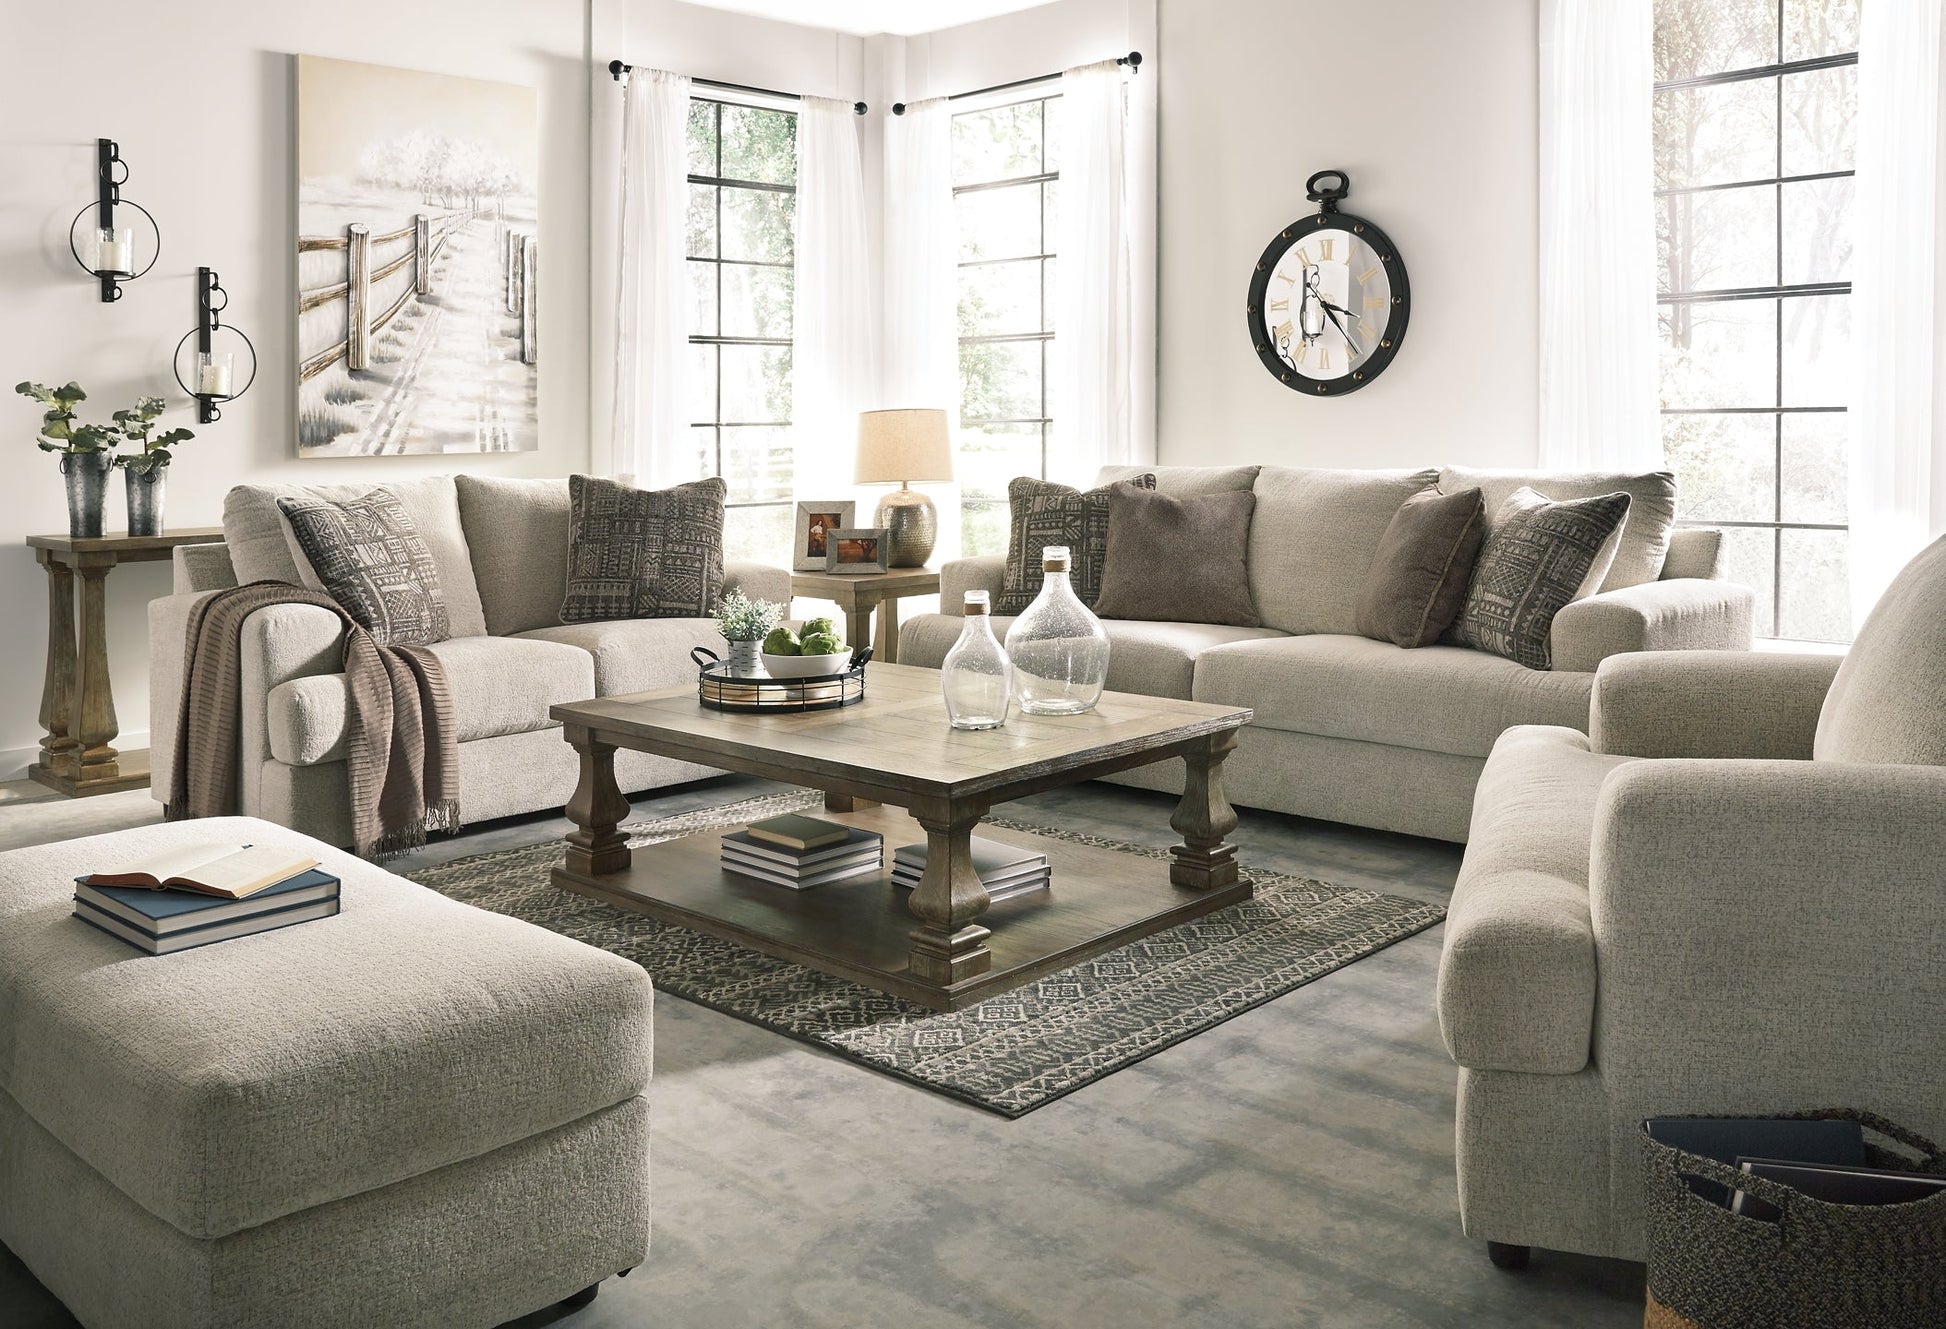 Soletren Sofa, Loveseat, Chair and Ottoman at Cloud 9 Mattress & Furniture furniture, home furnishing, home decor